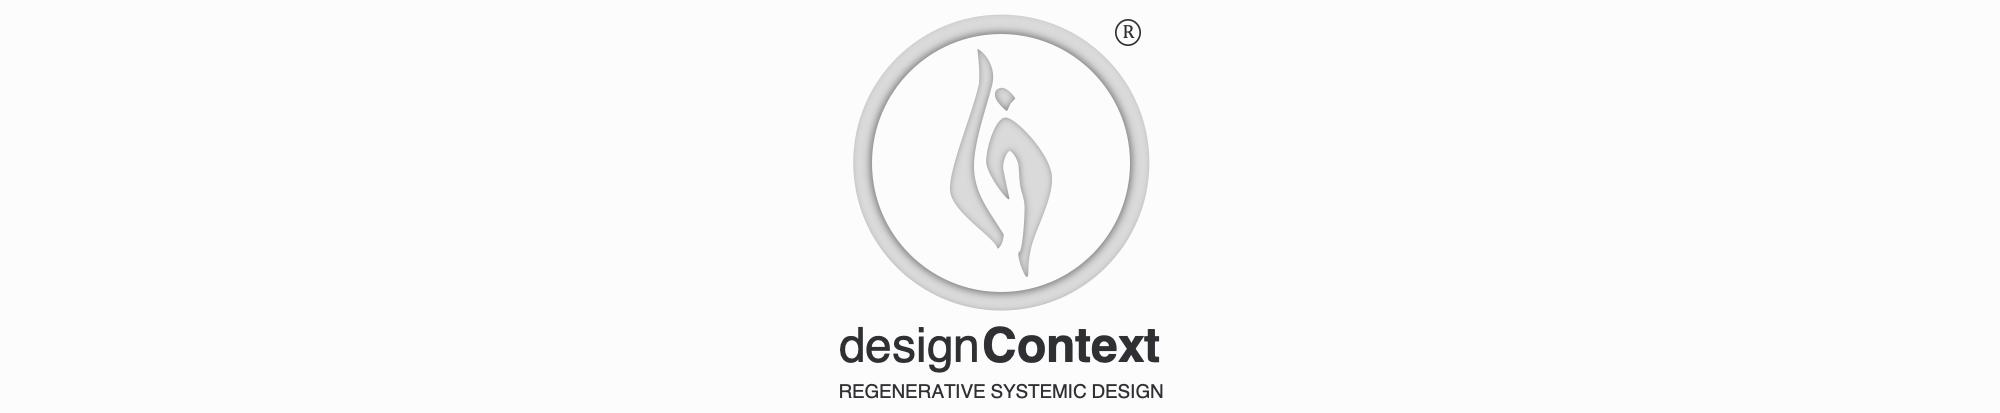 Agence designContext Logo